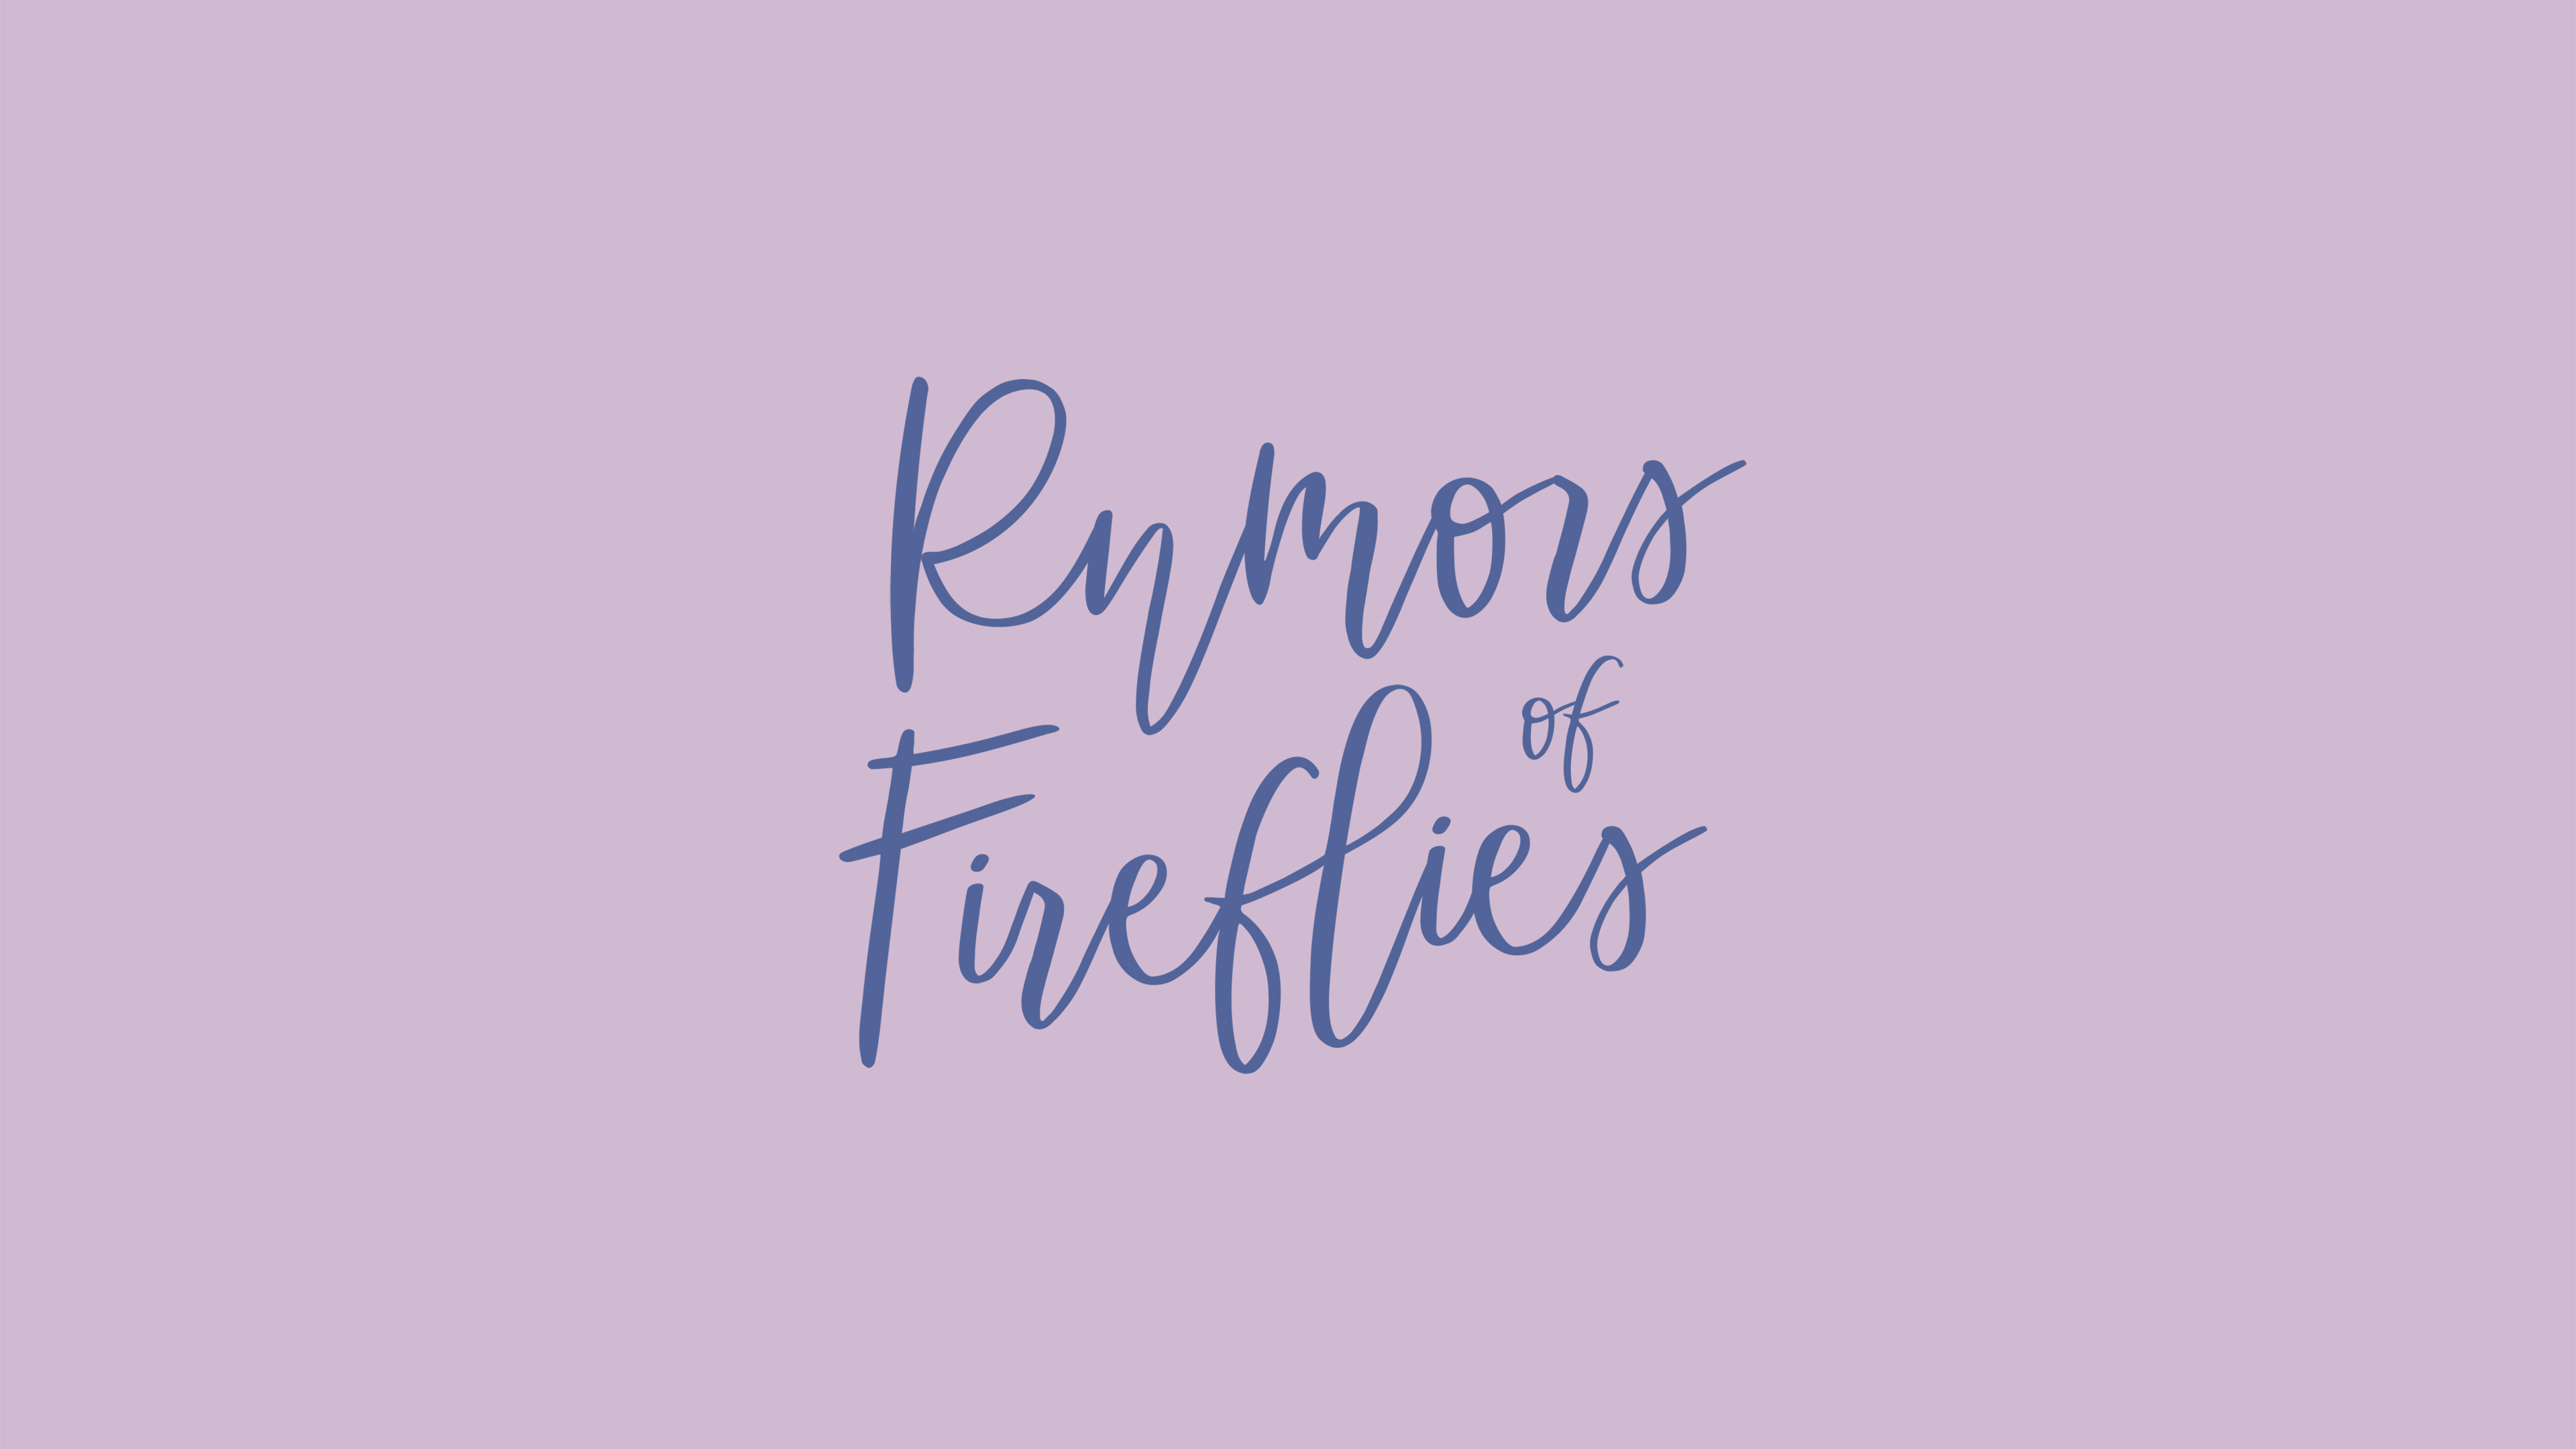 Rumors of Fireflies